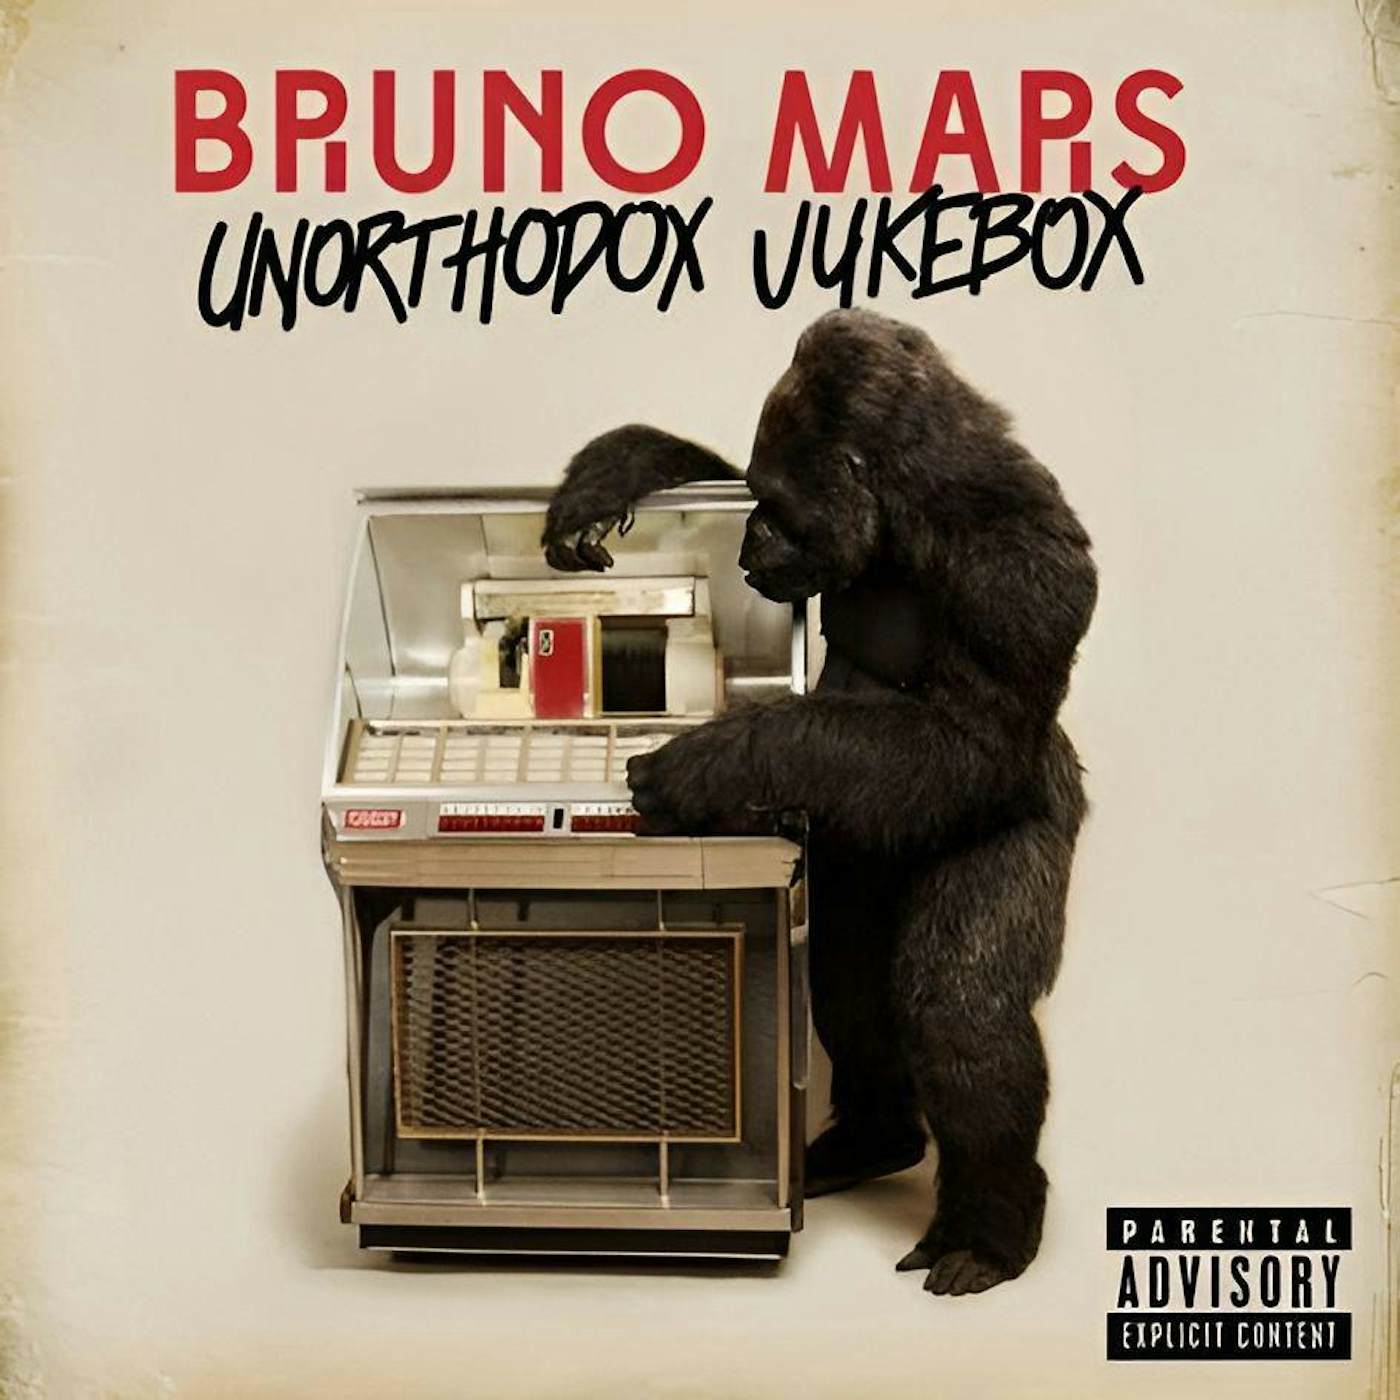 Bruno Mars Unorthodox Jukebox - Red Splatter Vinyl Record